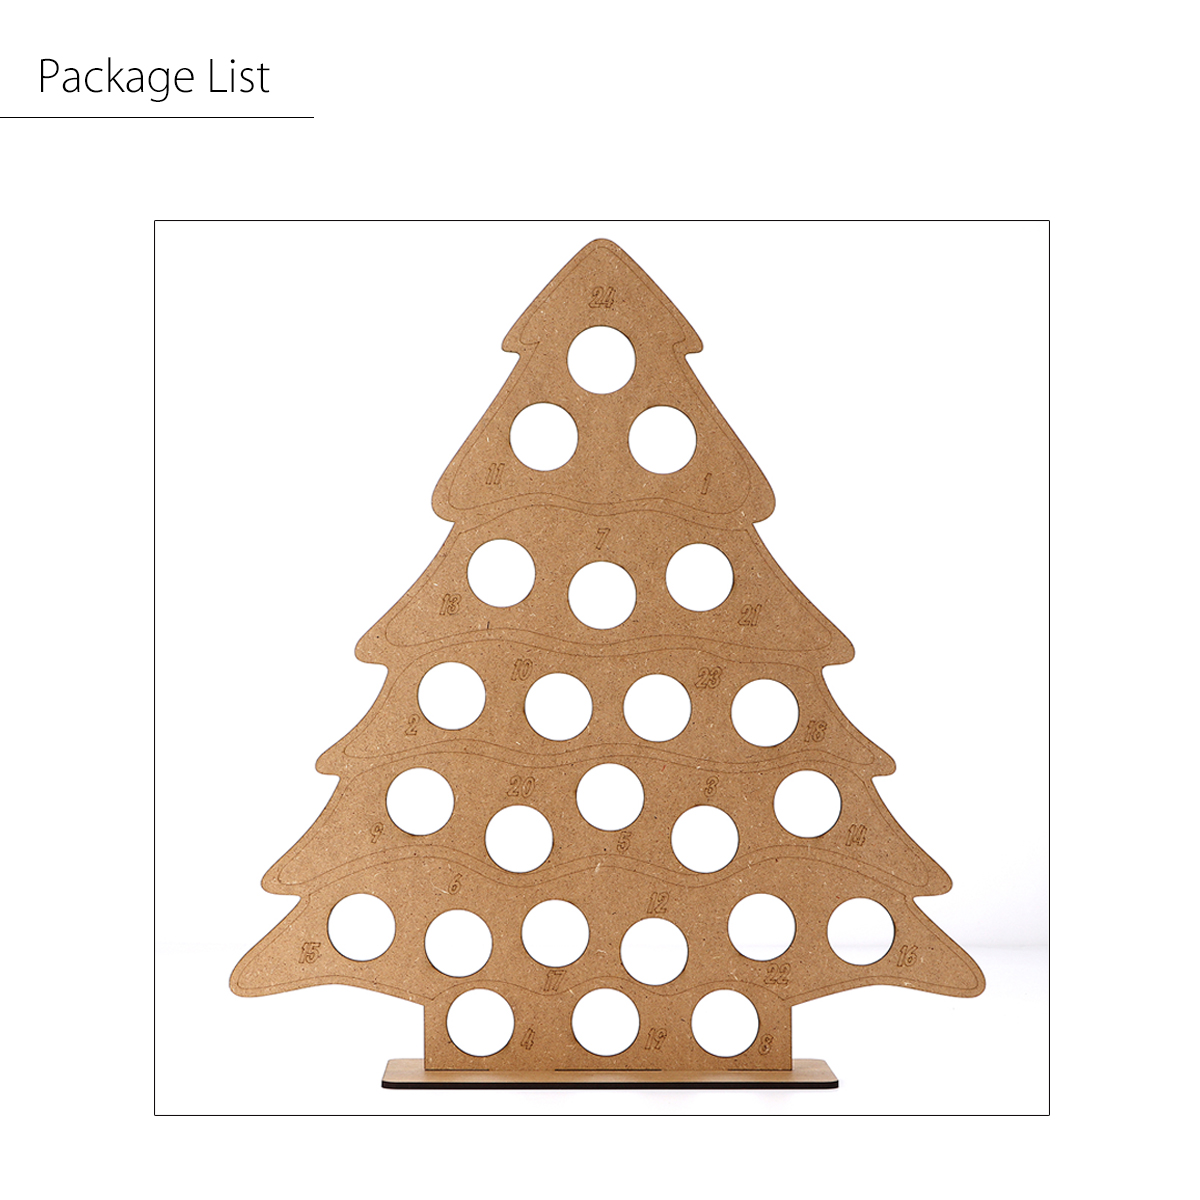 MDF-Wooden-Christmas-Advent-Calendar-Christmas-Tree-Decoration-Fits-24-Circular-Chocolates-Candy-Sta-1587877-5